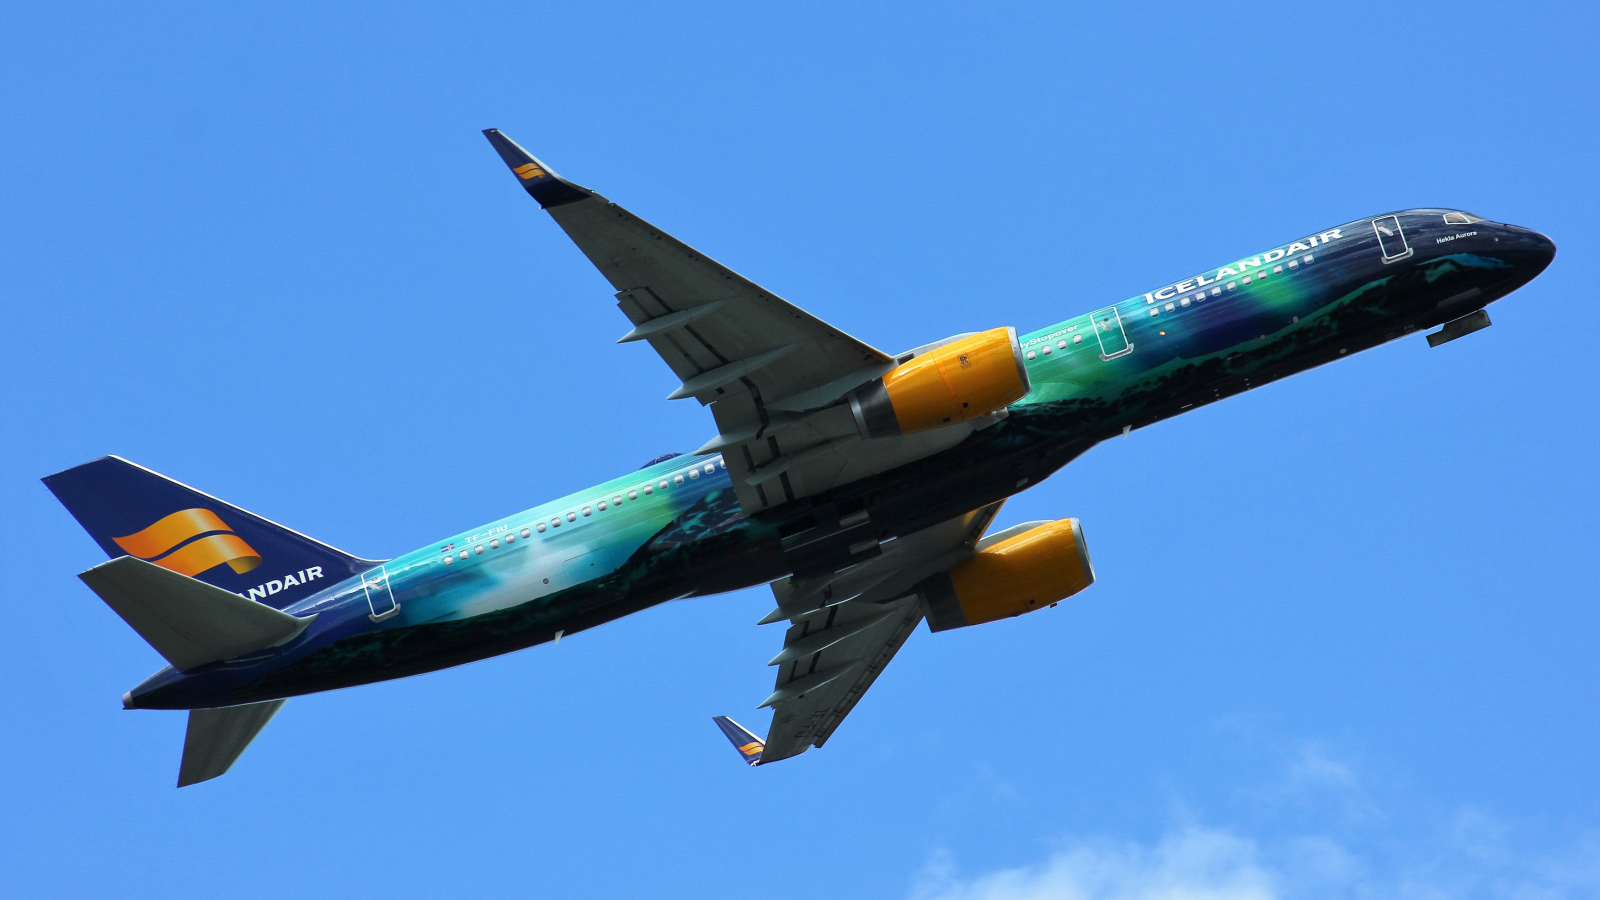 Passenger Boeing 757-256 in the sky